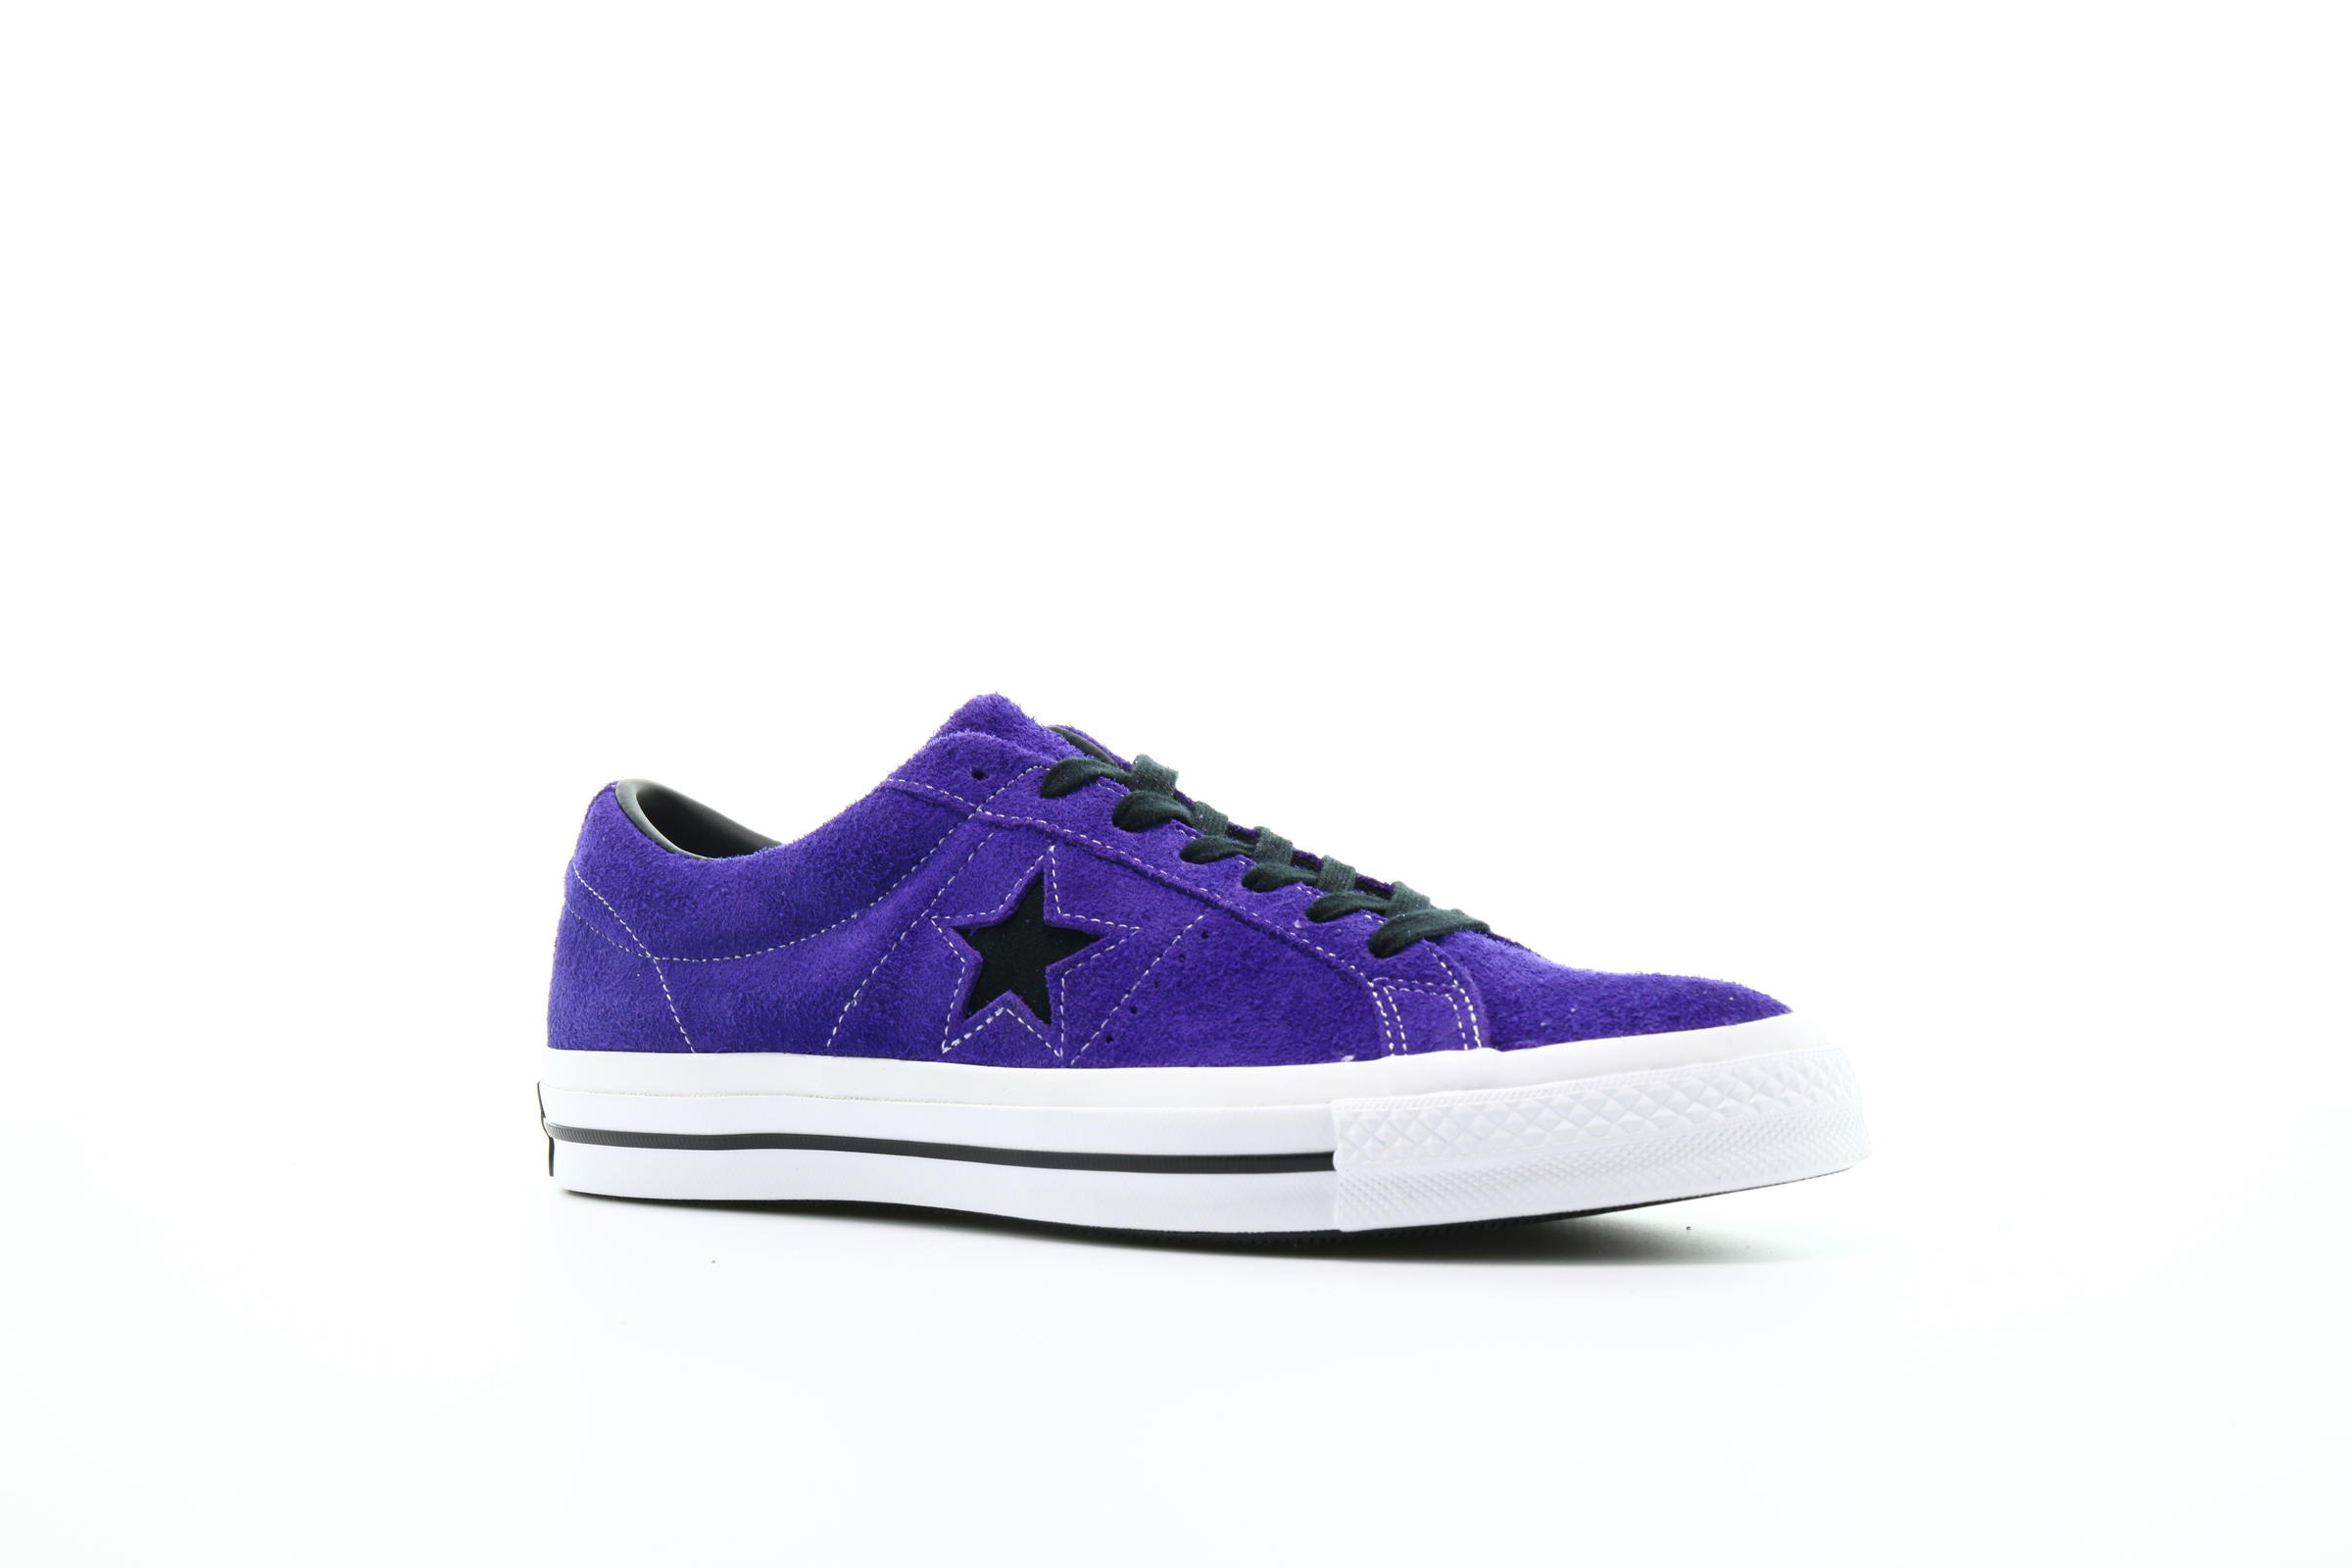 Converse One Star OX "Court Purple"